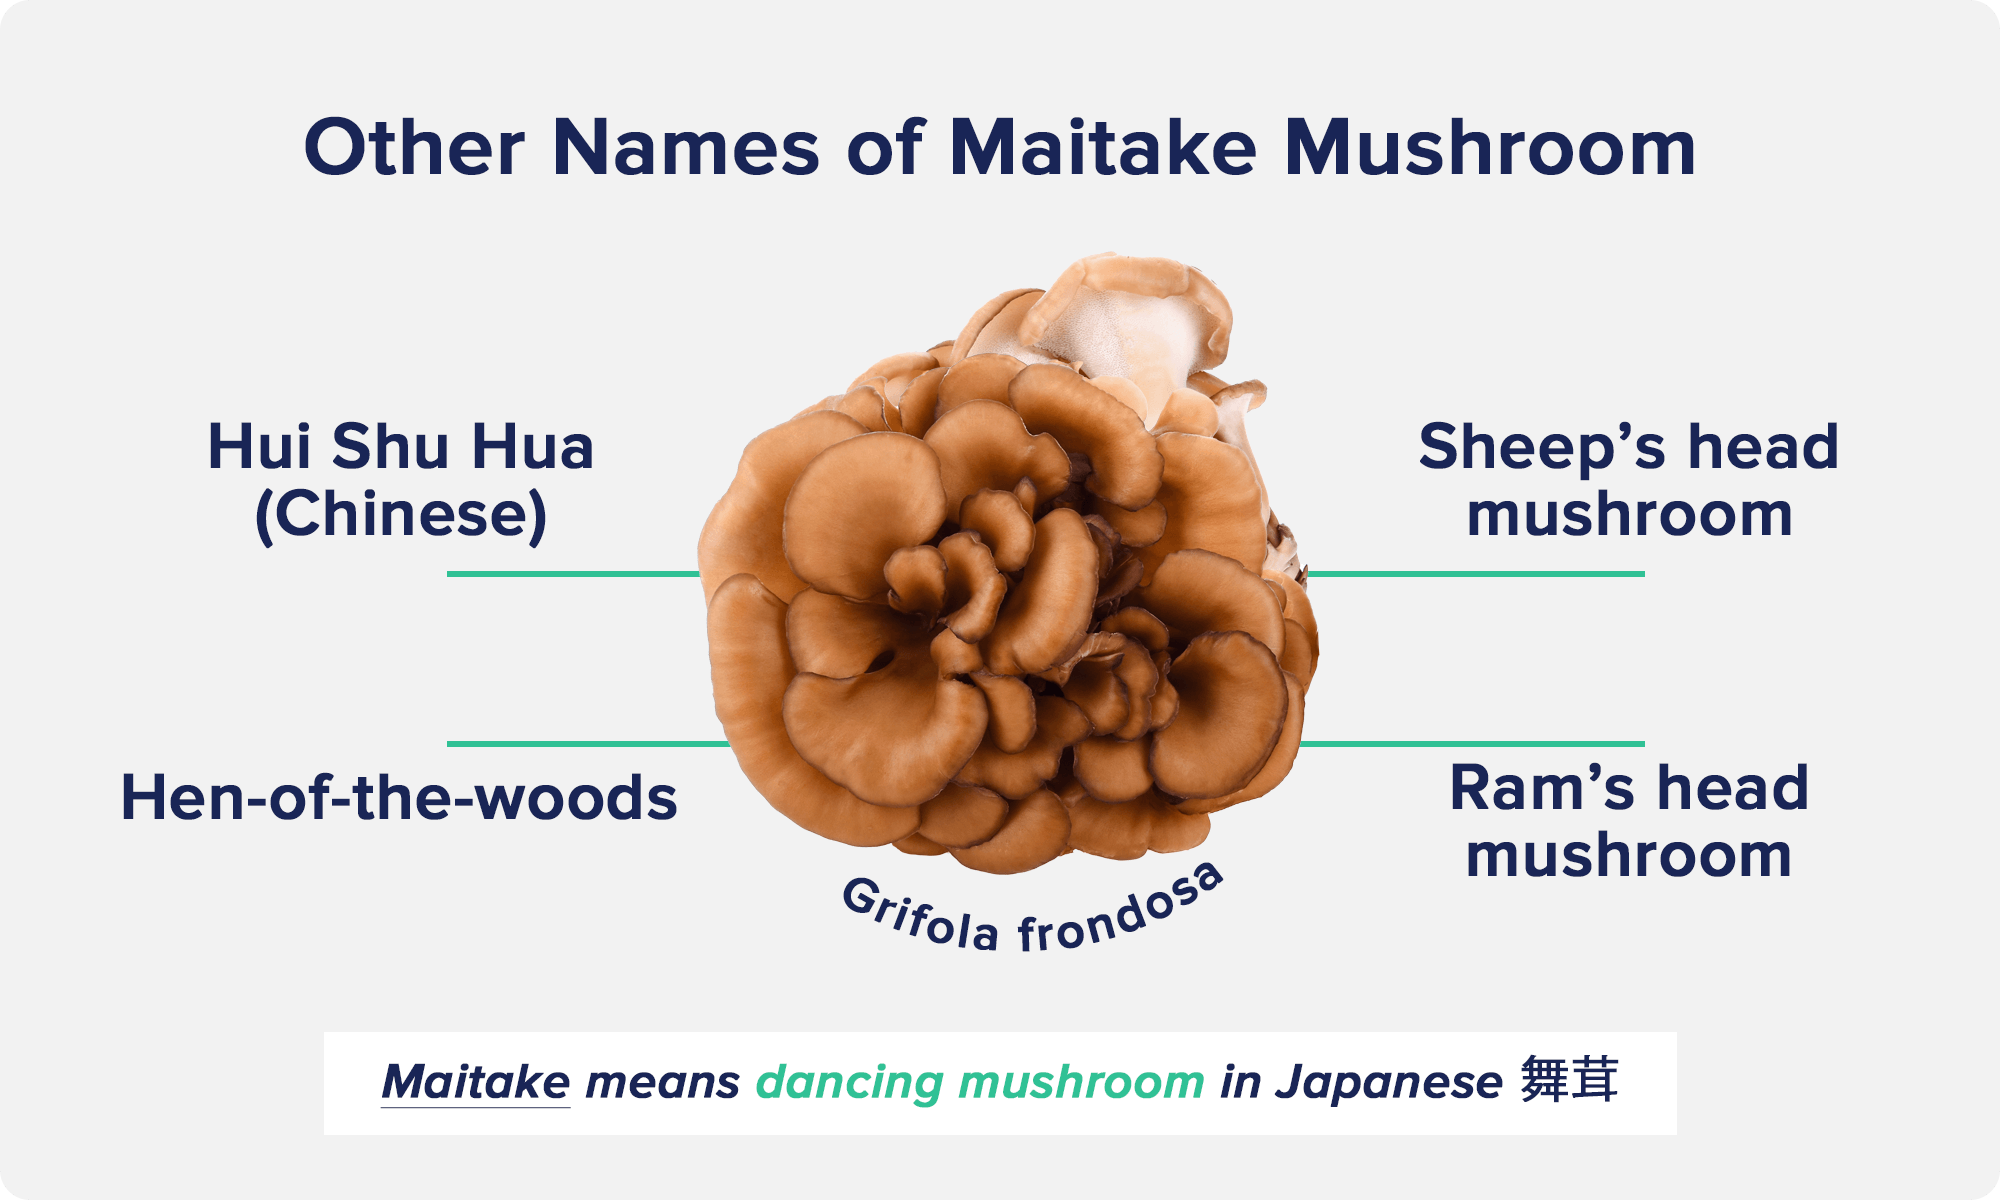 Other names of Maitake Mushroom